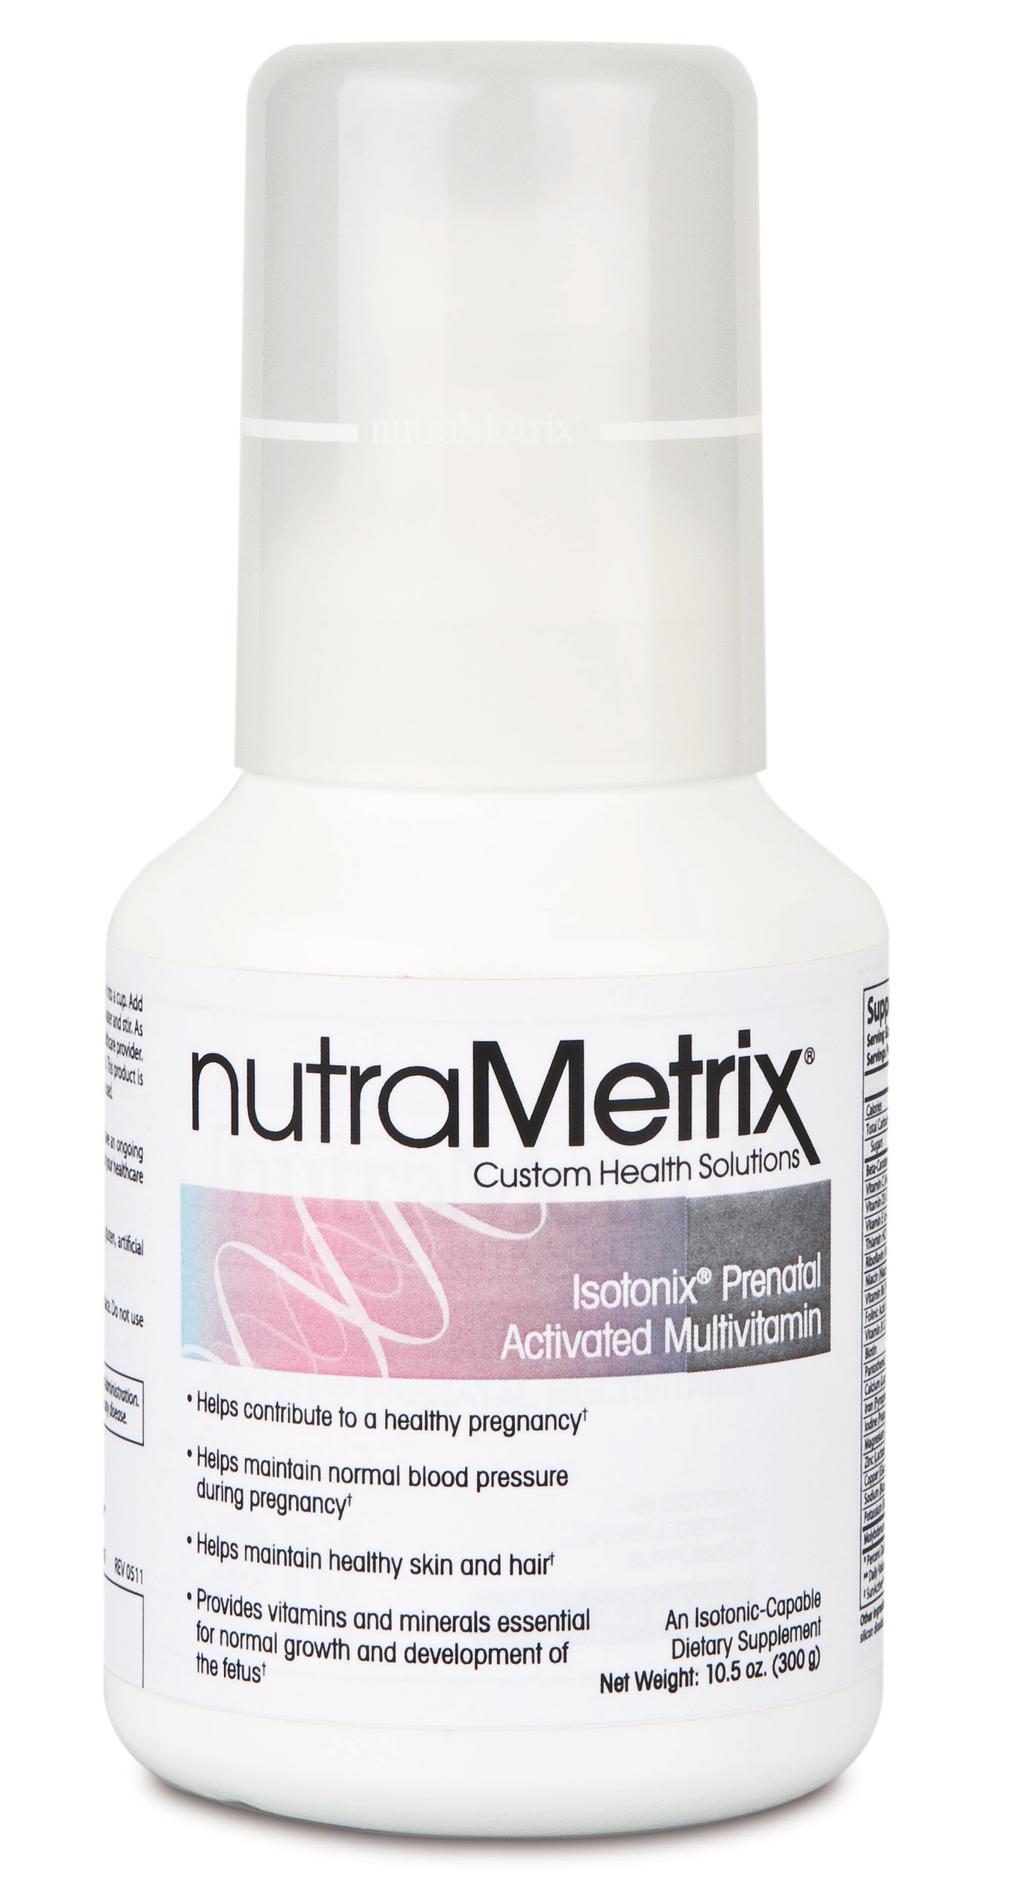 nutrametrix Isotonix Prenatal Activated Multivitamin Female Support Regimen nutrametrix Custom Health Solutions An Isotonic-Capable Dietary Supplement Net Weight: 10.6 oz.